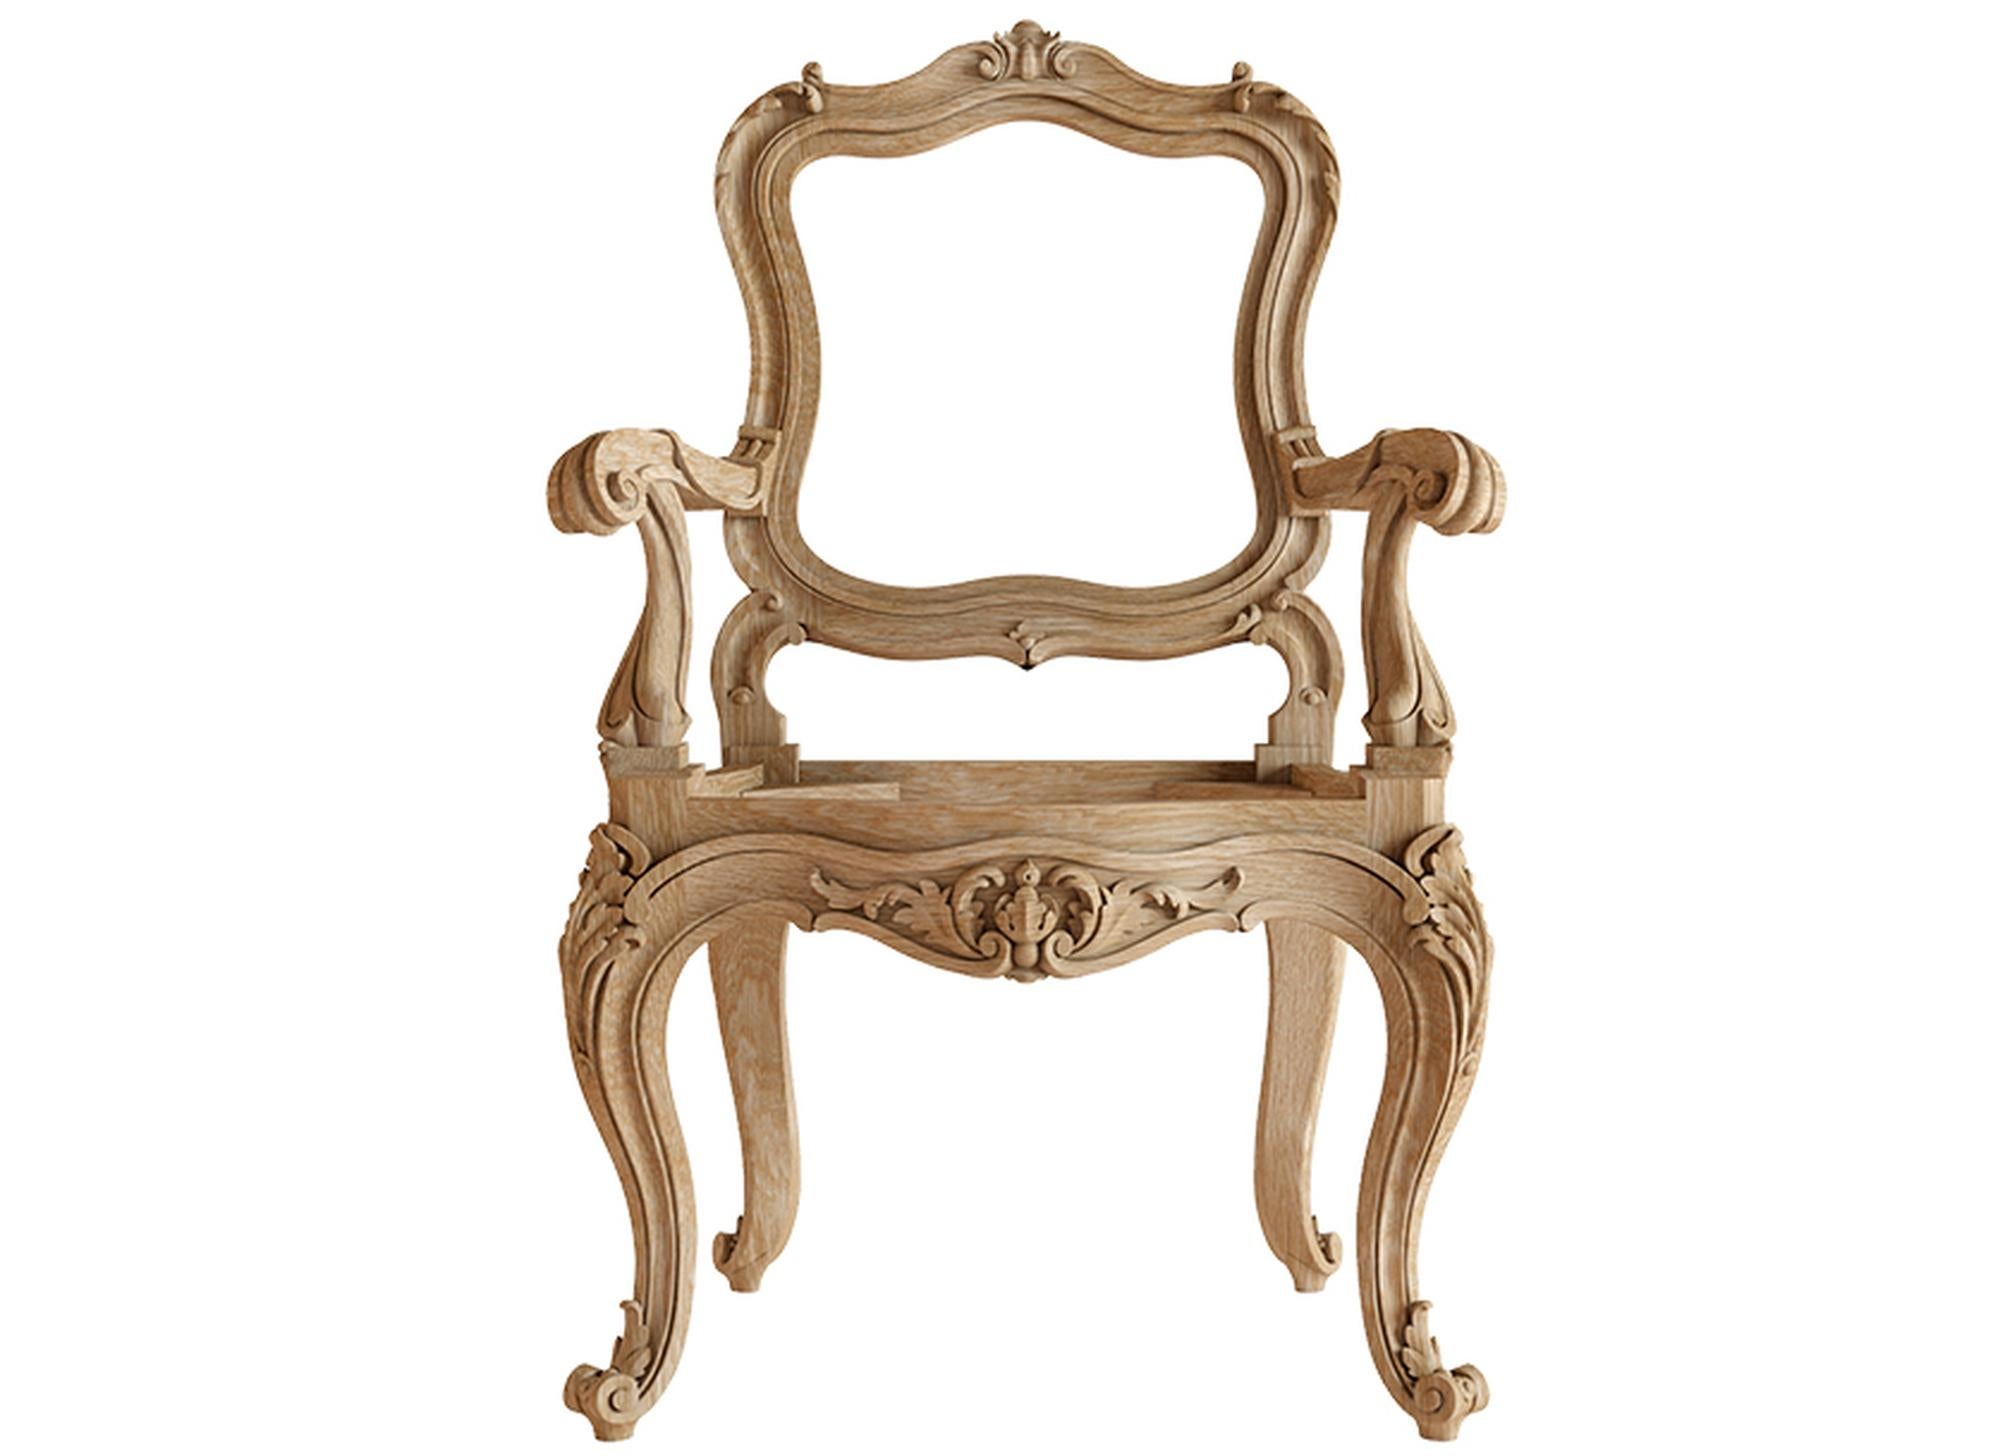 High-quality carved chair frame. Unpainted.

>> SKU: STU-001

>> Dimensions (A x B x C):

- 25.39